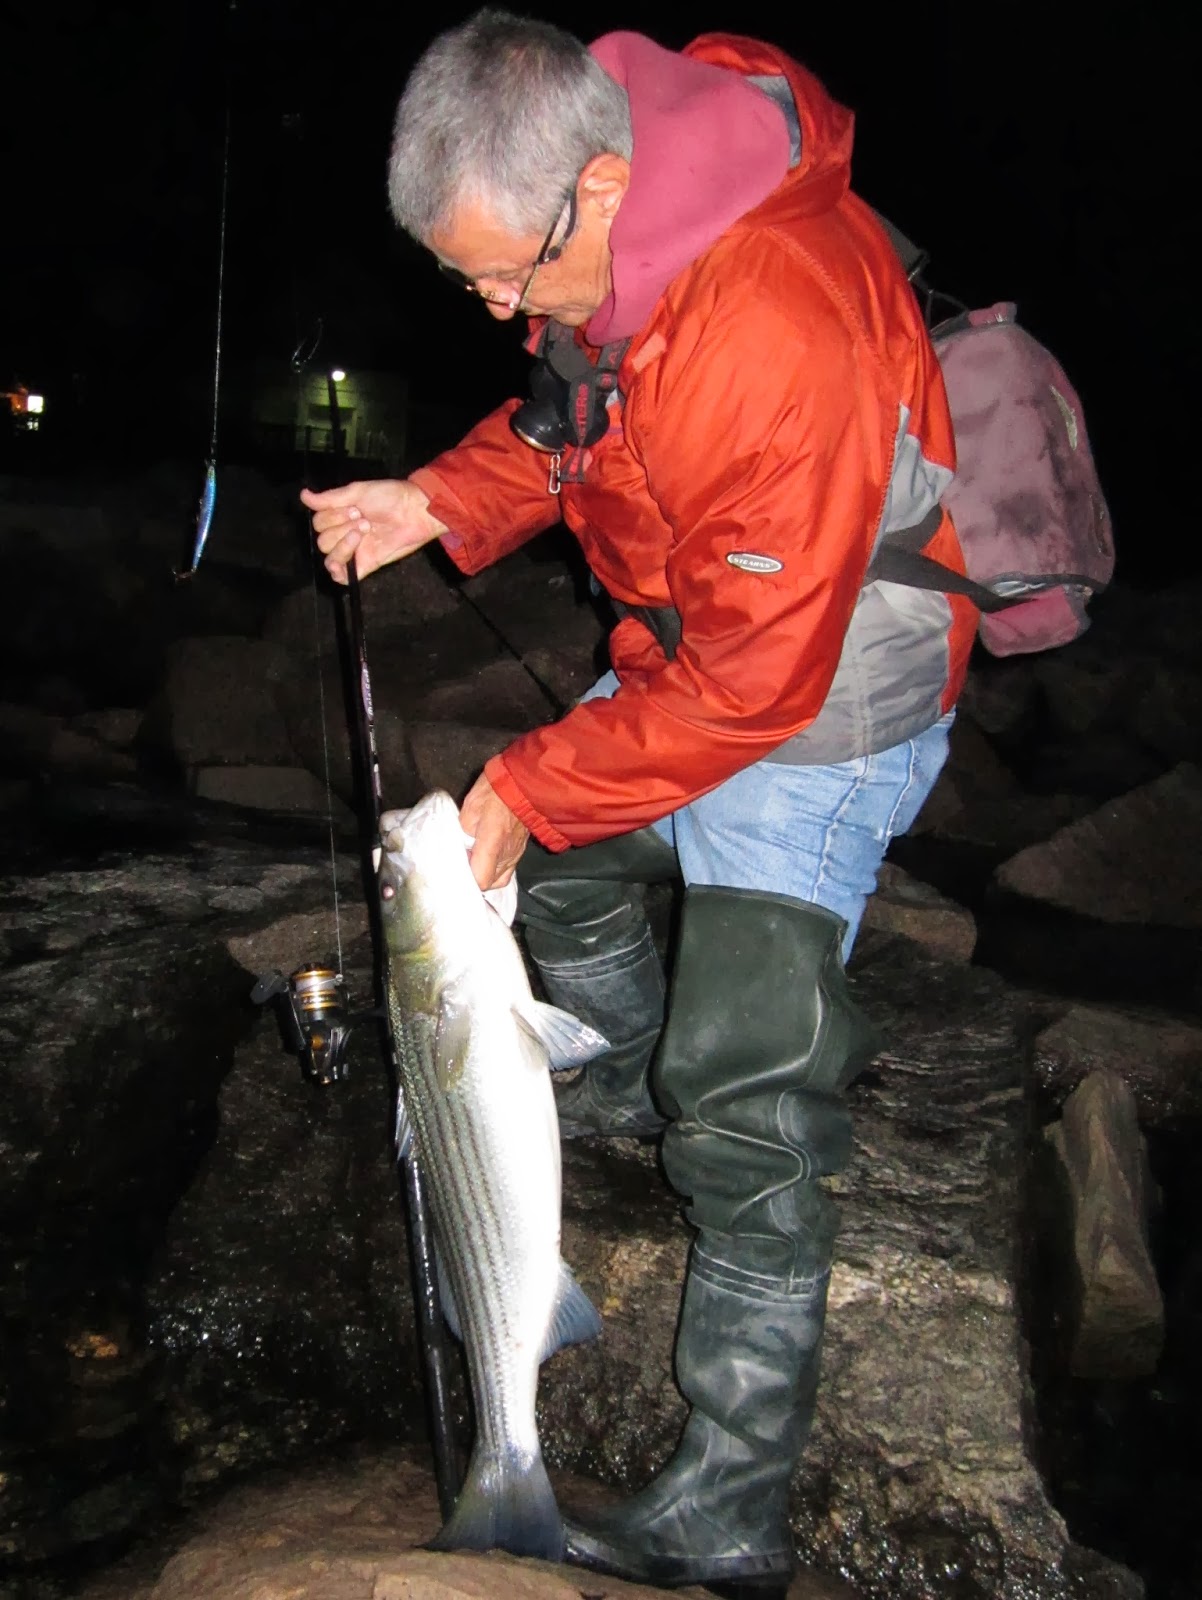 Rhode Island Striped Bass: Nighttime Fishing Perks Up